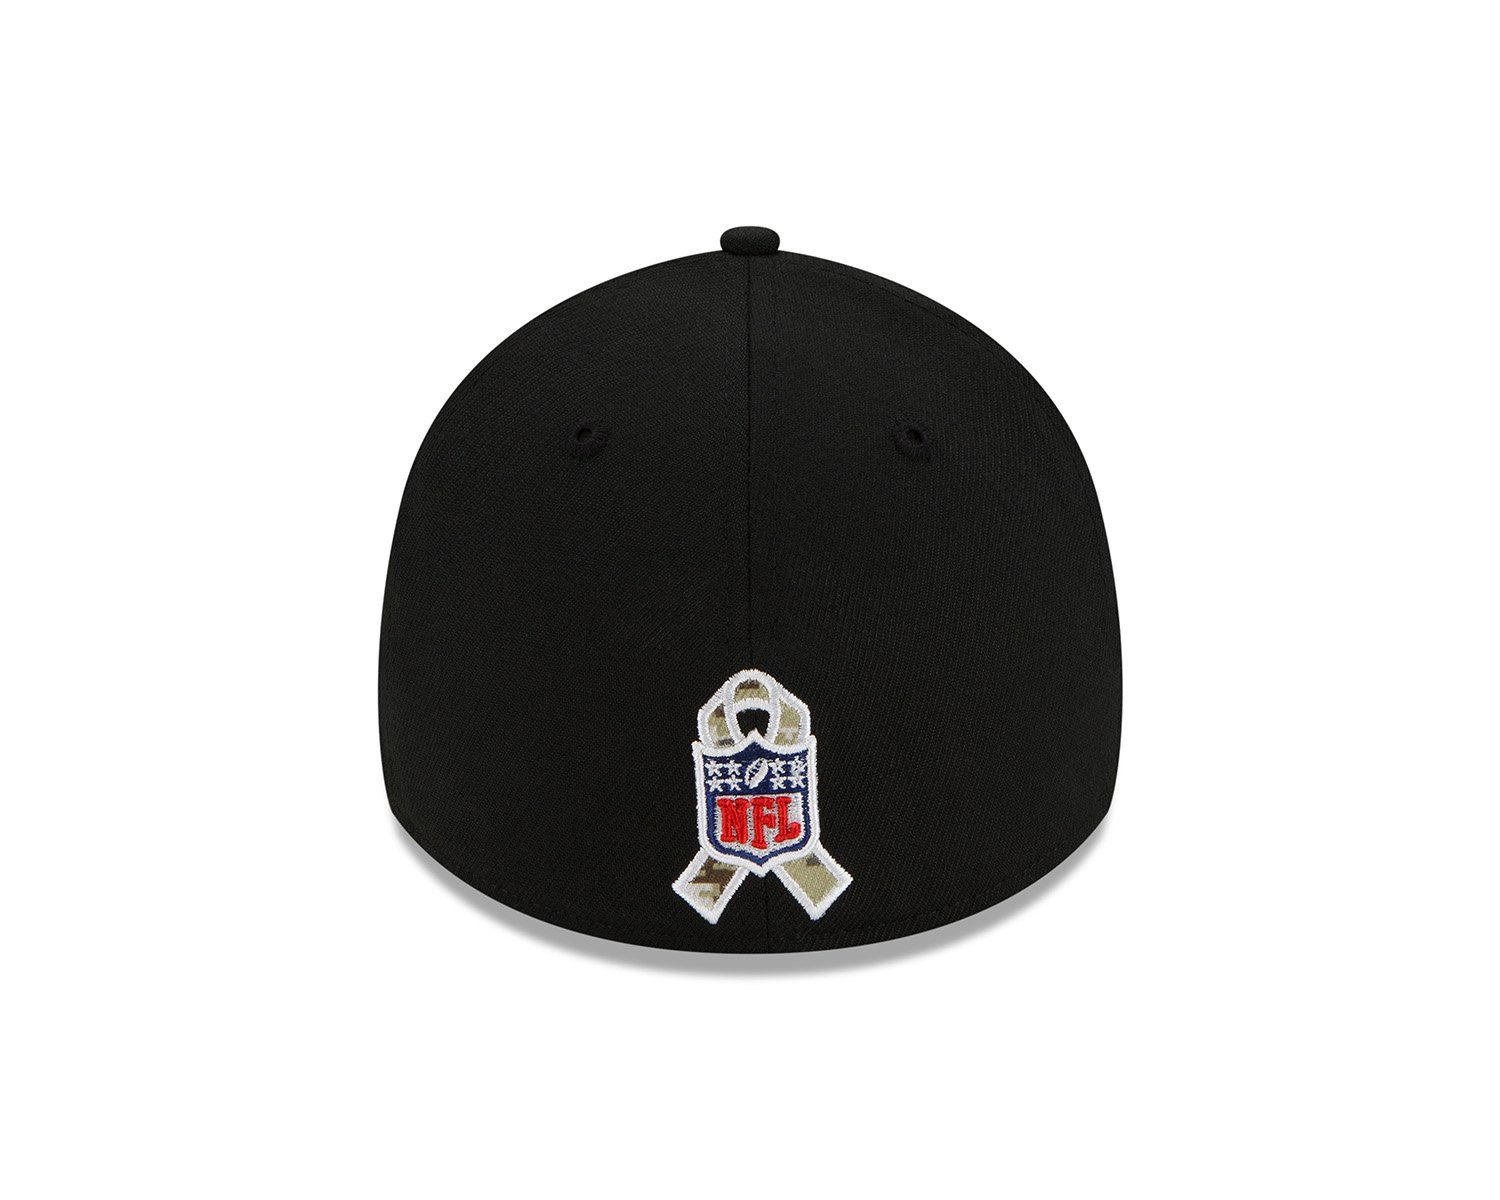 NFL 39THIRTY Cap Logo Salute 49ers Baseball Cap 3930 Era NFL To SIELD New Service